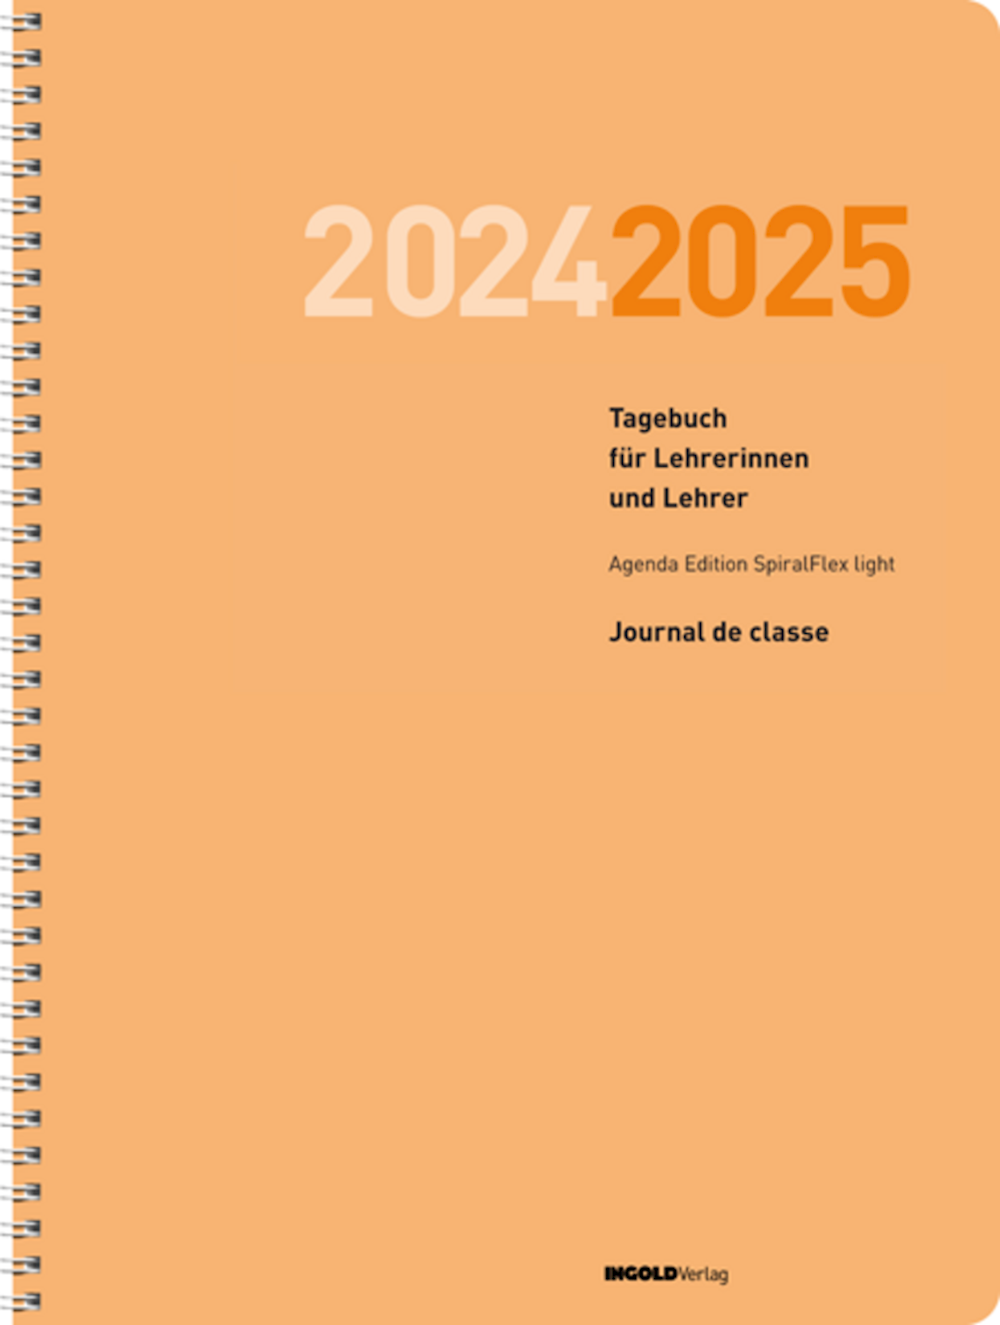 Tagebuch für Lehrpersonen 2024/2025  Agenda Editio